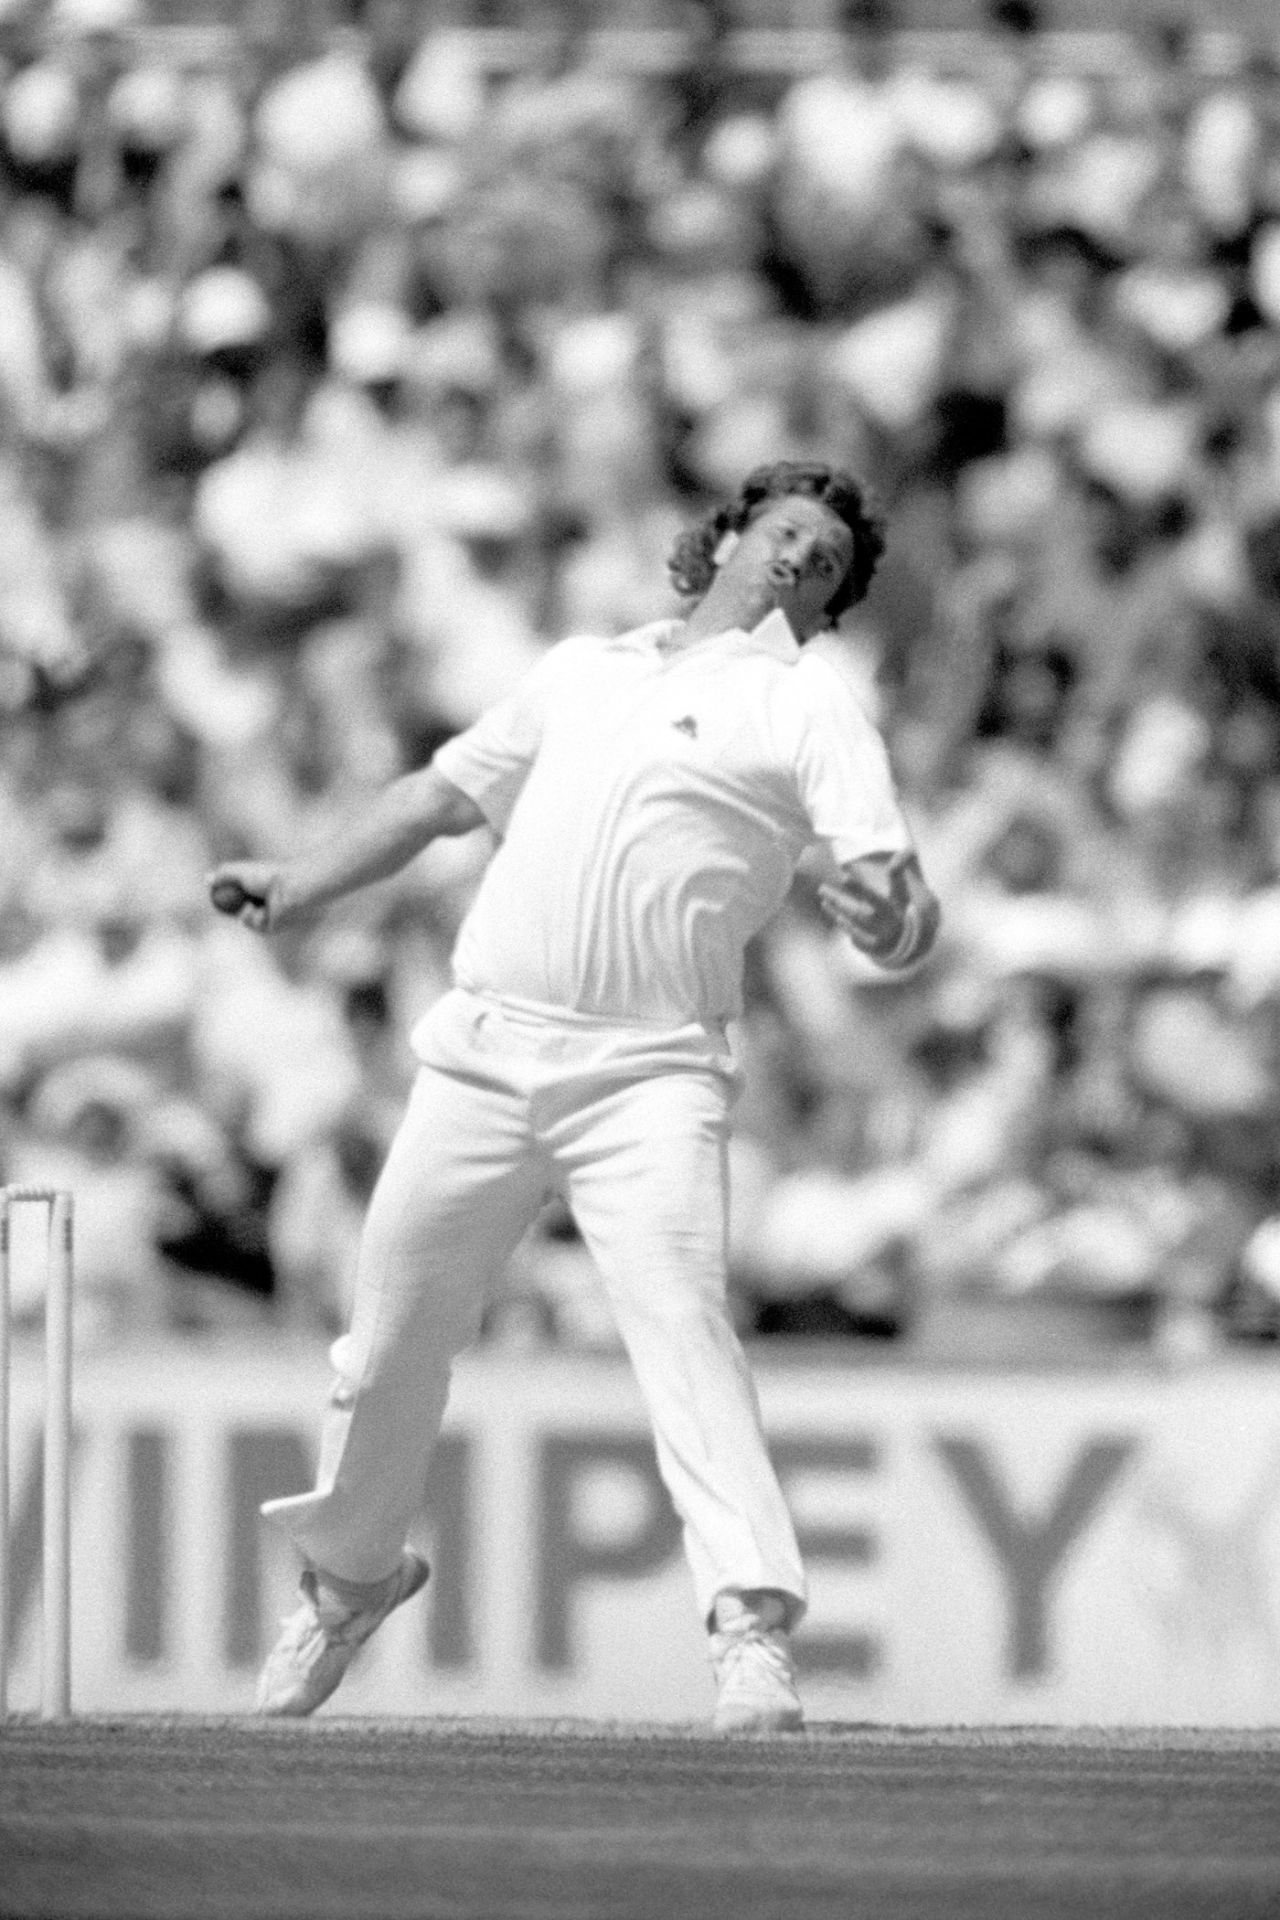 Abdul Qadir bowls out Ian Botham, England v Pakistan, 5th Test, The Oval, 4th day, August 10, 1987